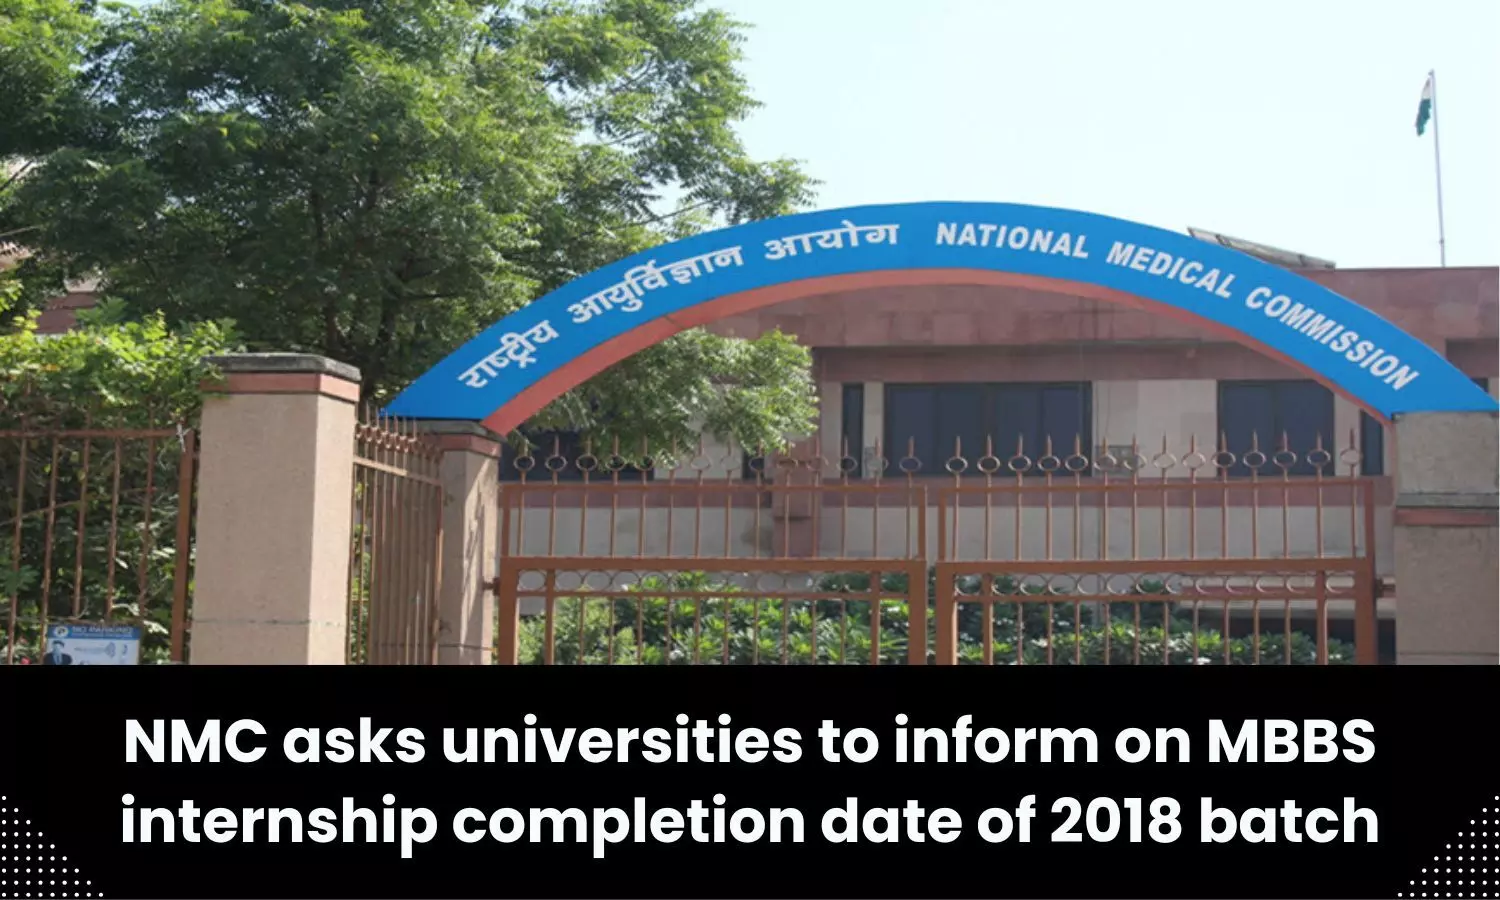 Inform on MBBS internship completion date of 2018 batch: NMC asks universities